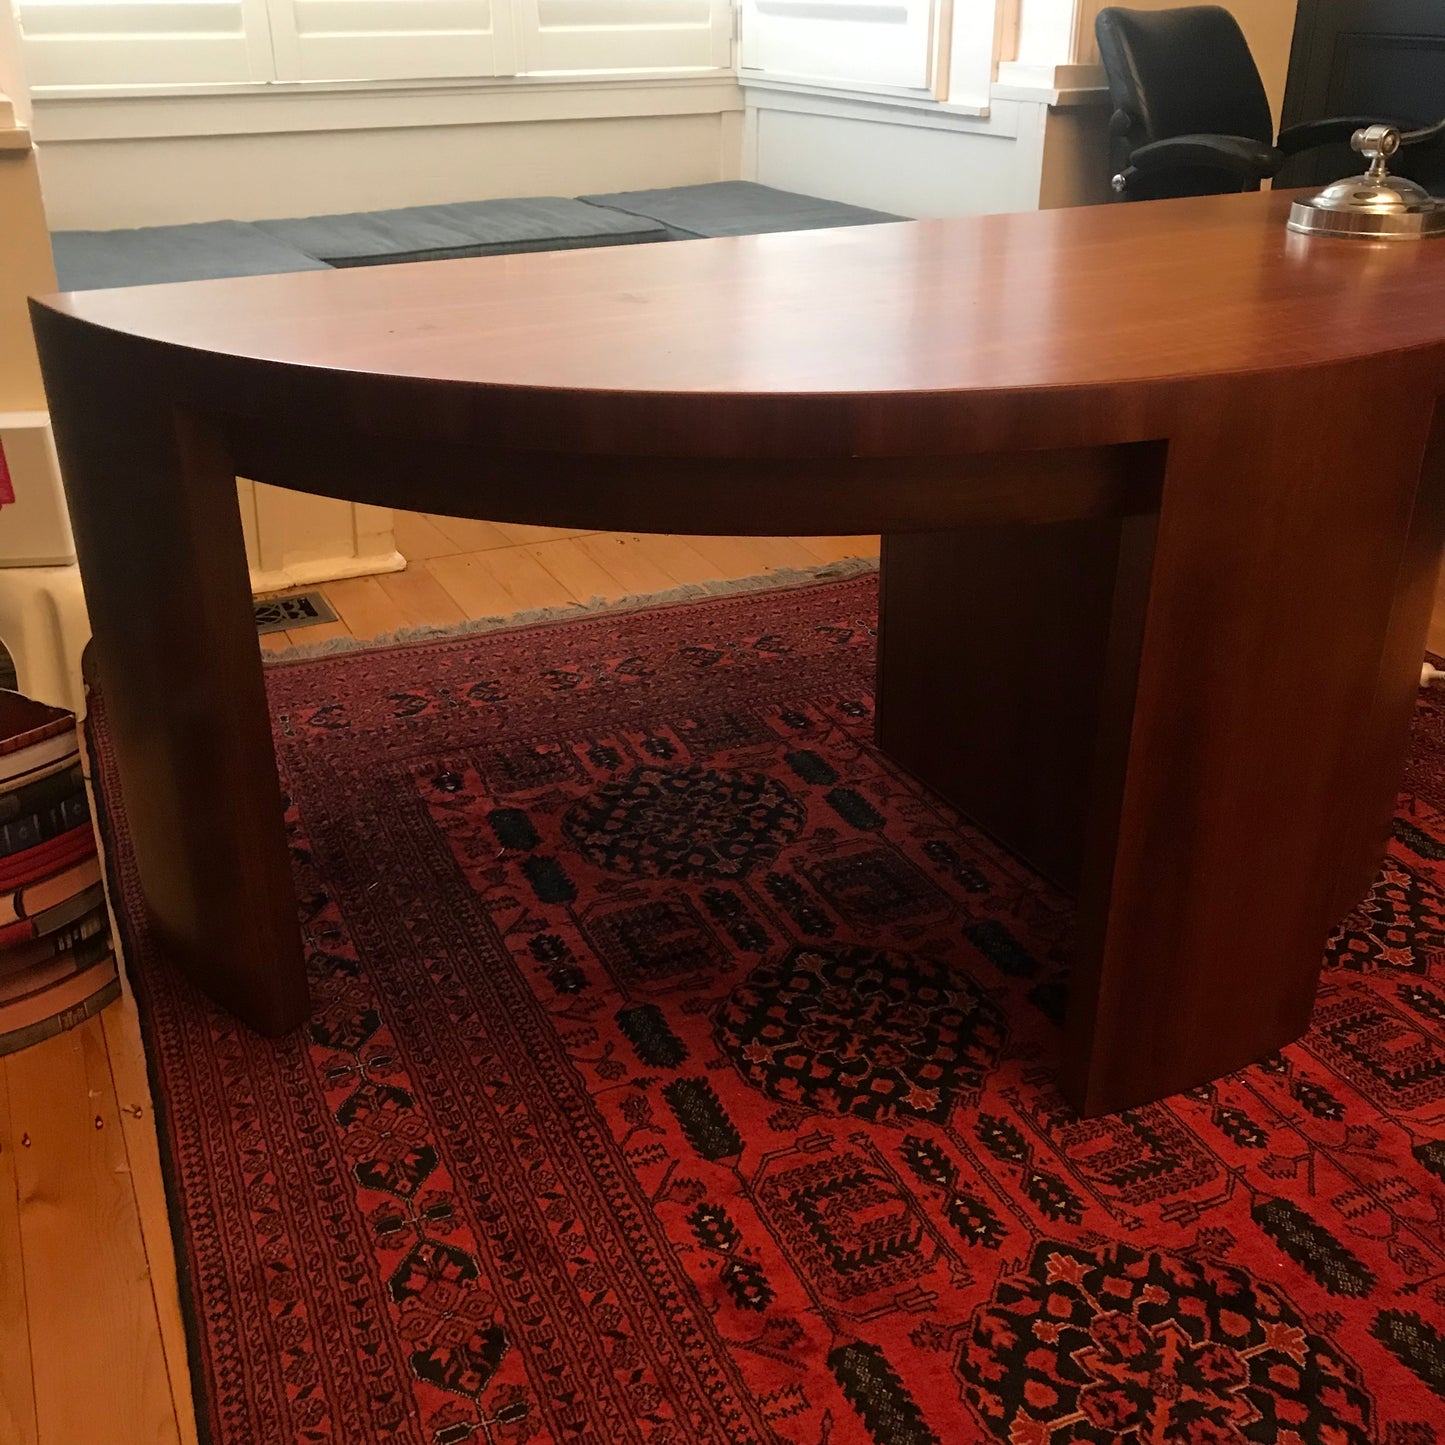 Custom Desk by Ross Longmuir for Planet Furniture